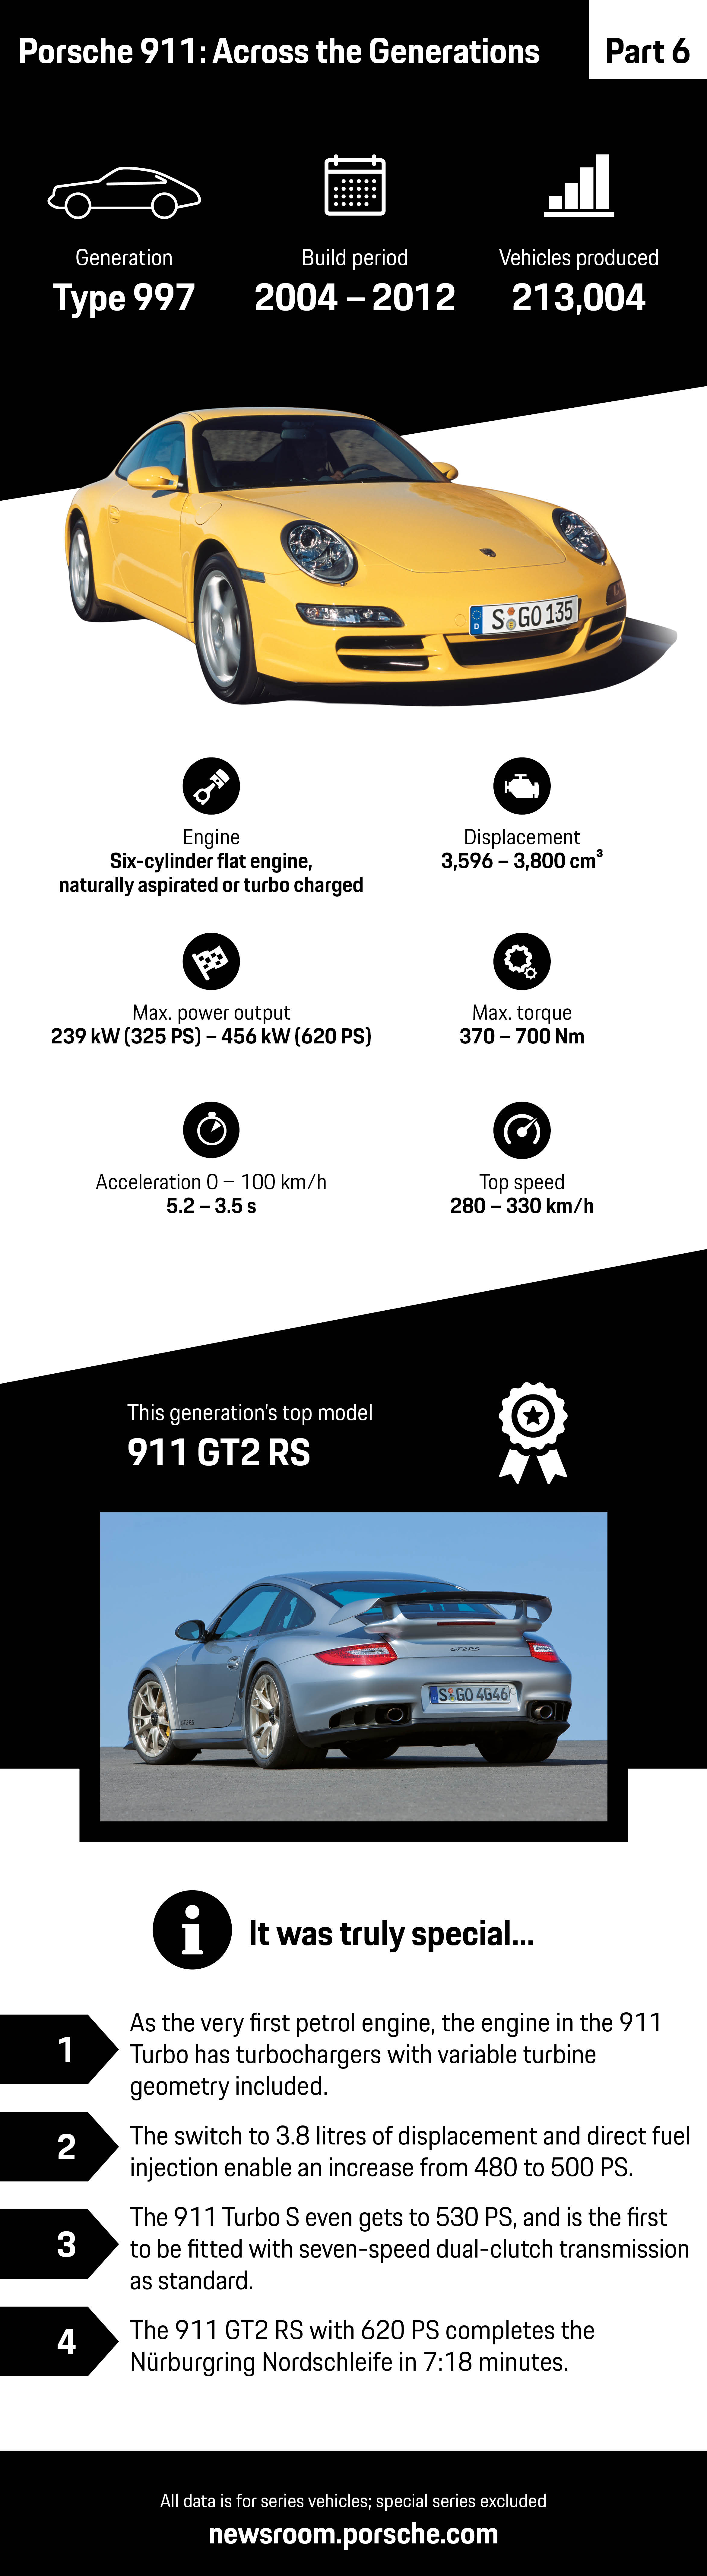 Porsche 911: Across the Generations – part 6, infographic, 2018, Porsche AG